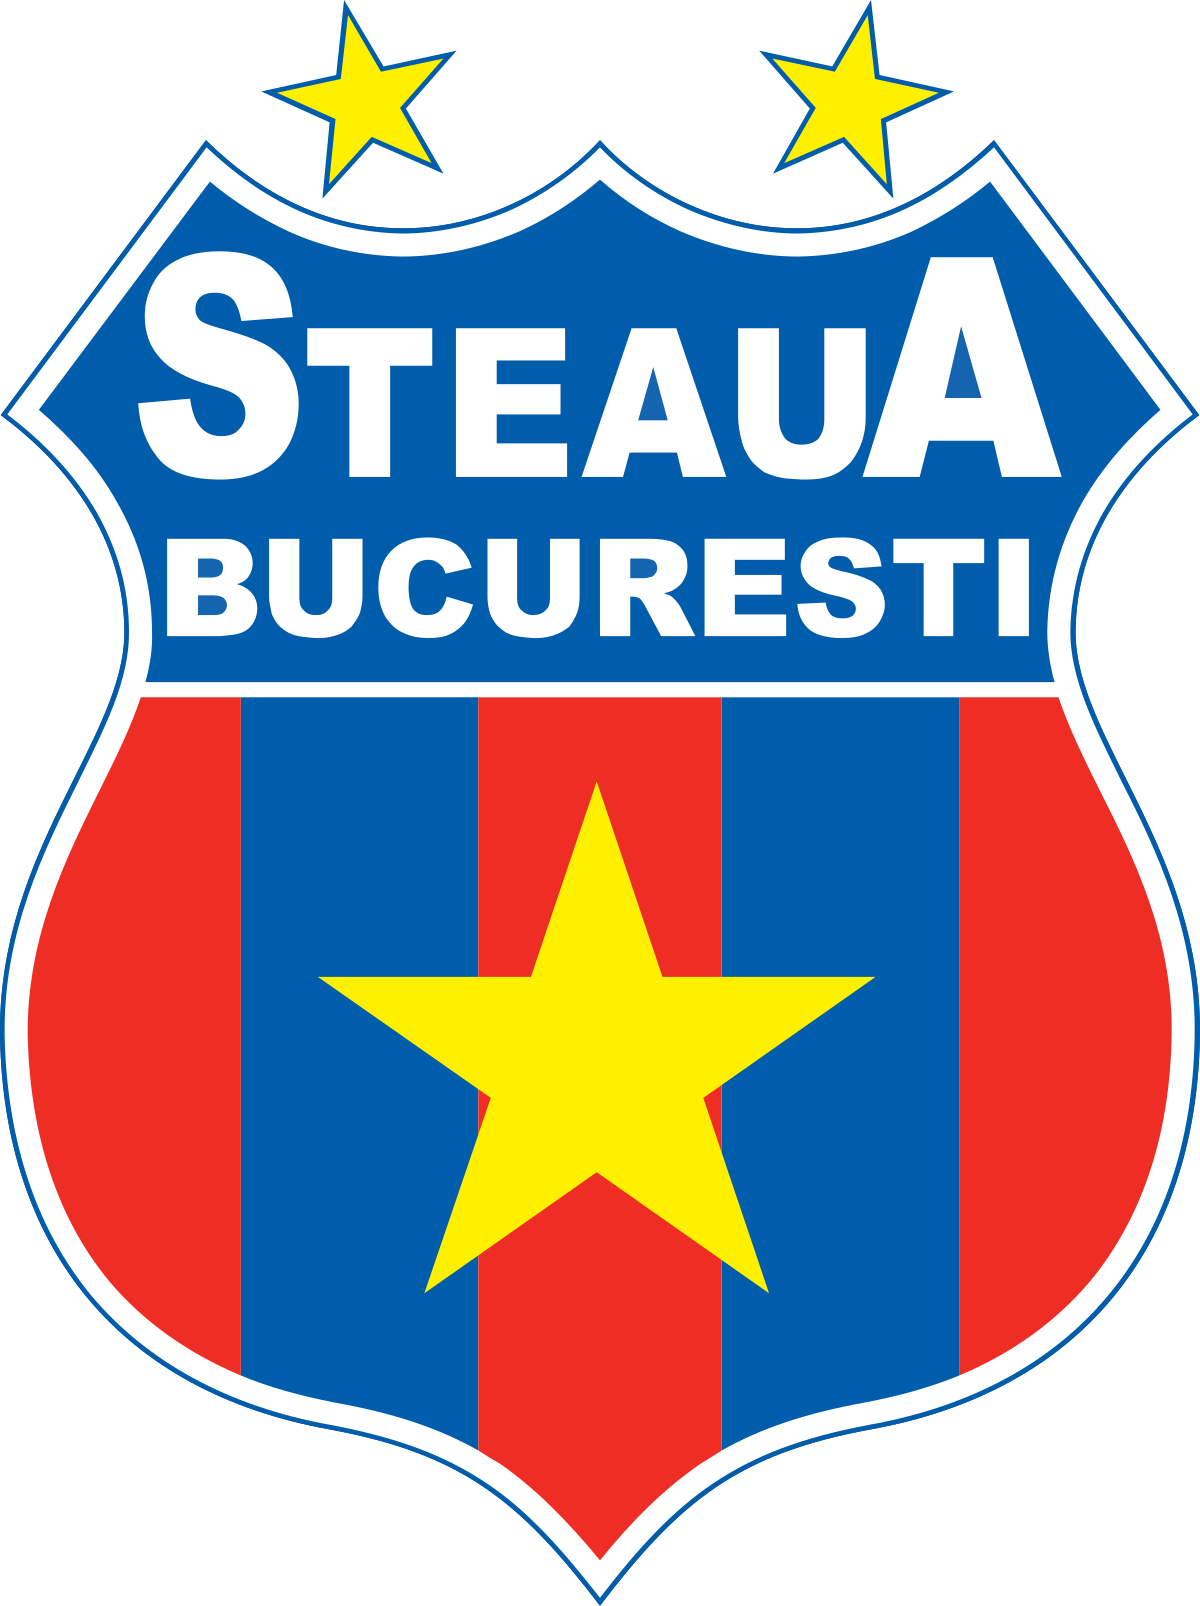 Csa Steaua București Fotbal Wikipedia